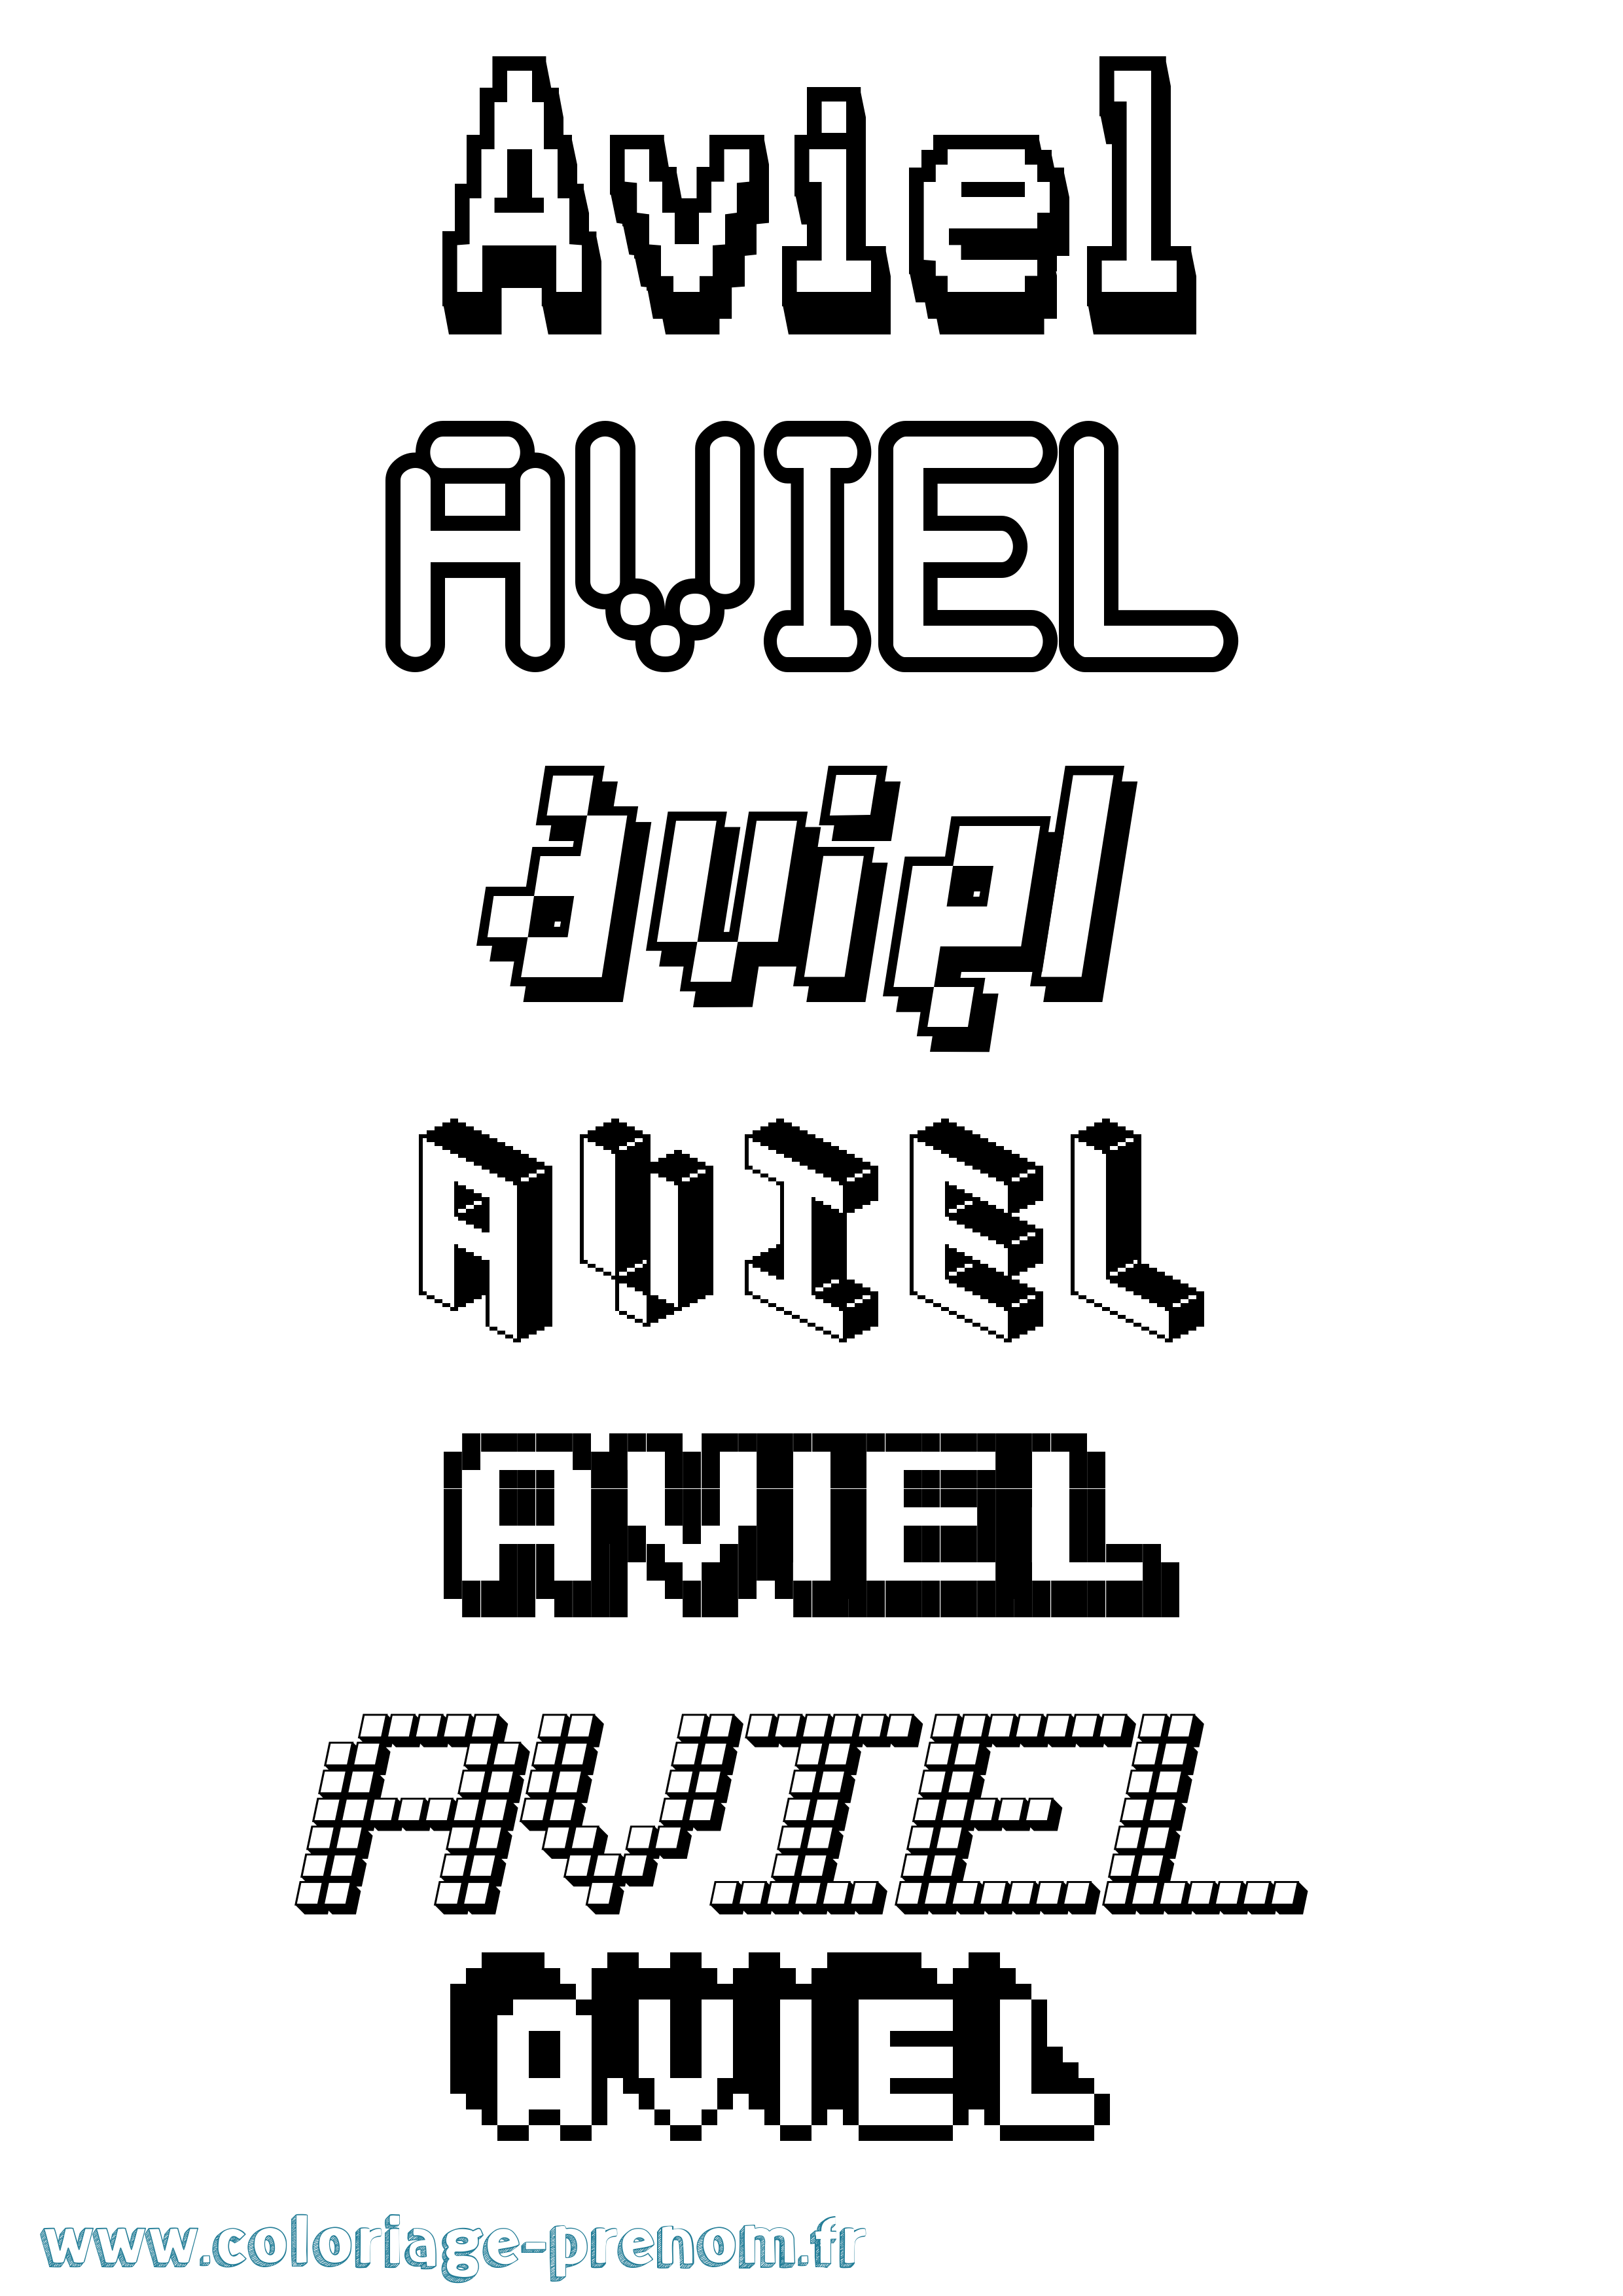 Coloriage prénom Aviel Pixel